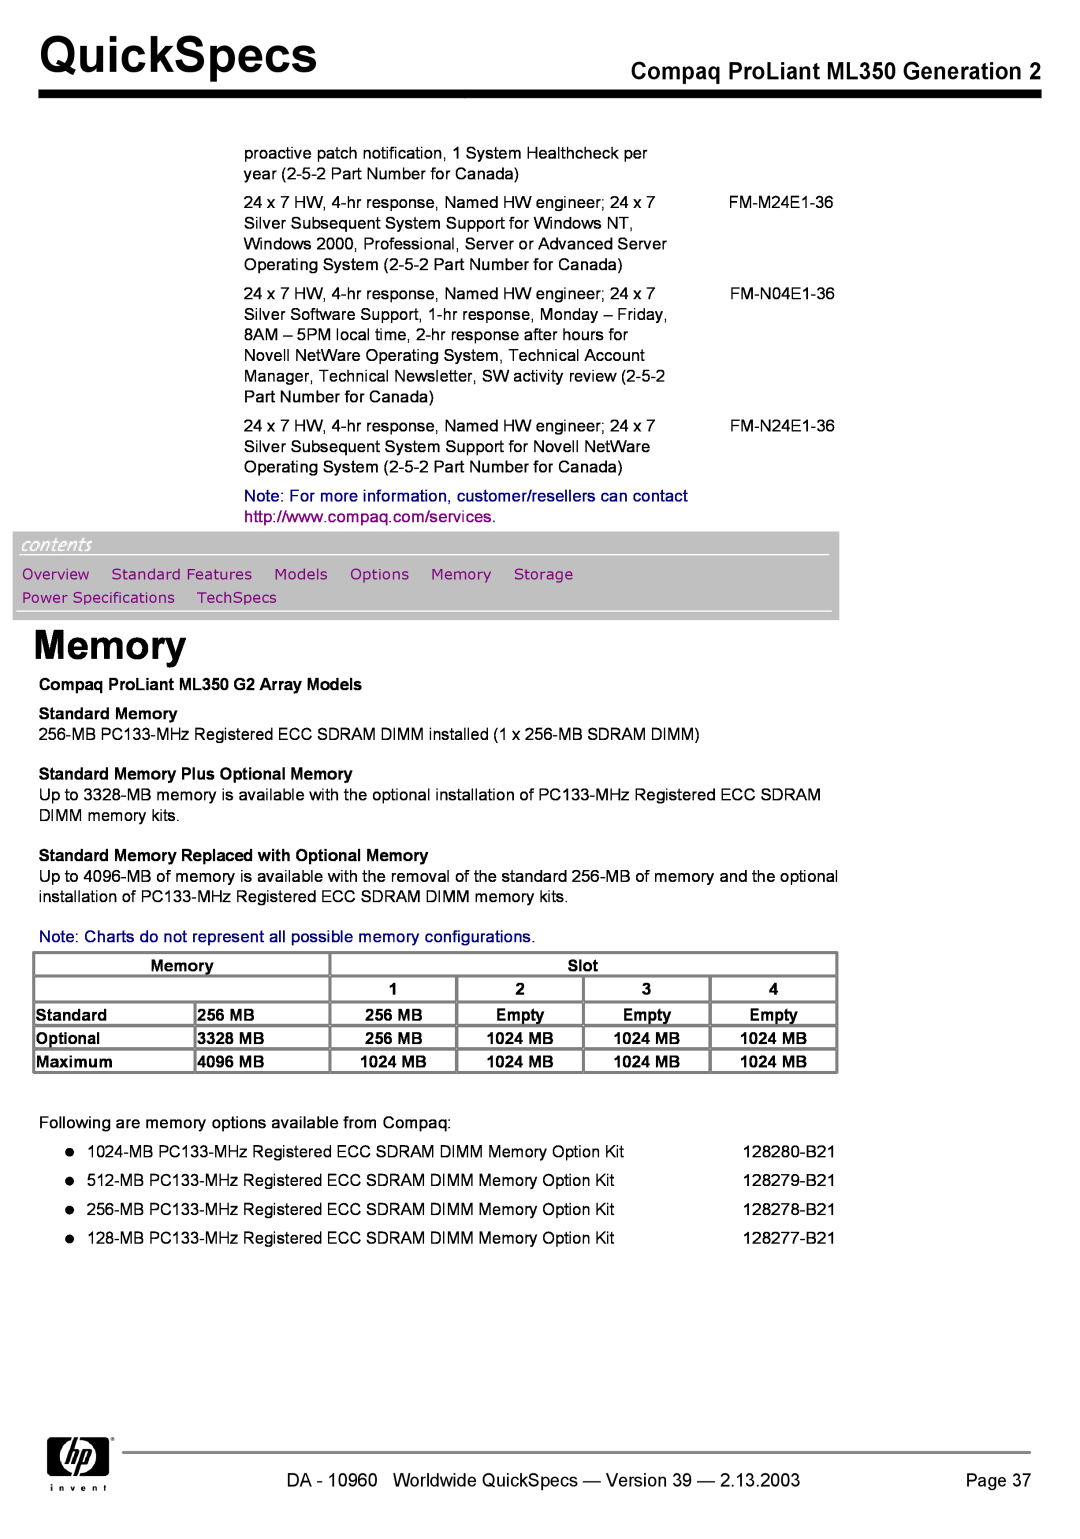 Compaq specifications Memory, Compaq ProLiant ML350 Generation, DA - 10960 Worldwide QuickSpecs - Version 39, Page 